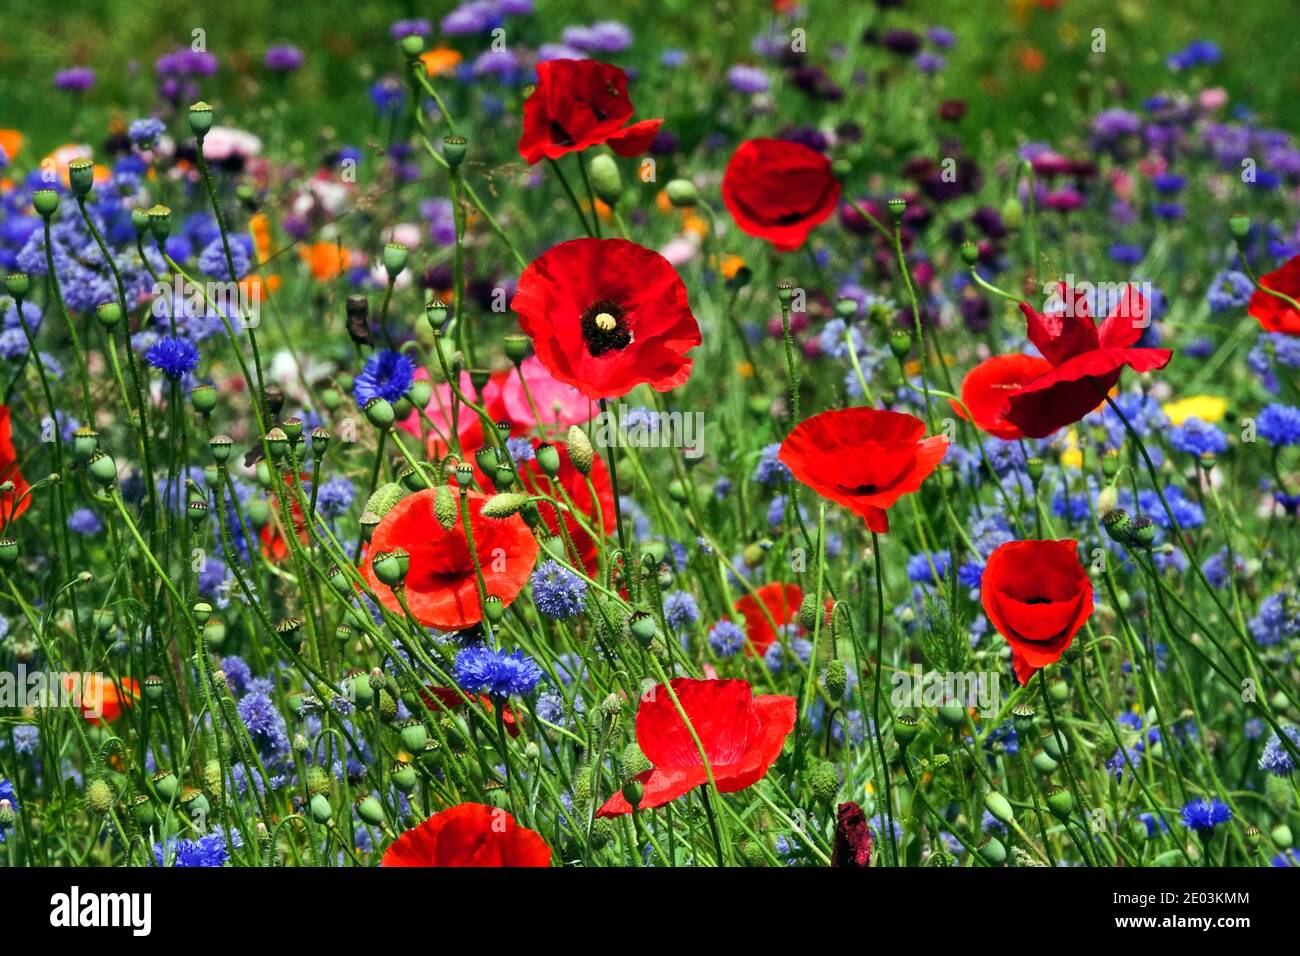 Blue Red Wildflowers Garden Poppies Garden Wild Flowers Meadow Red Papaver rhoeas Red poppy Field poppy Blooms Blue Cornflowers Mixed Summer Plants Stock Photo